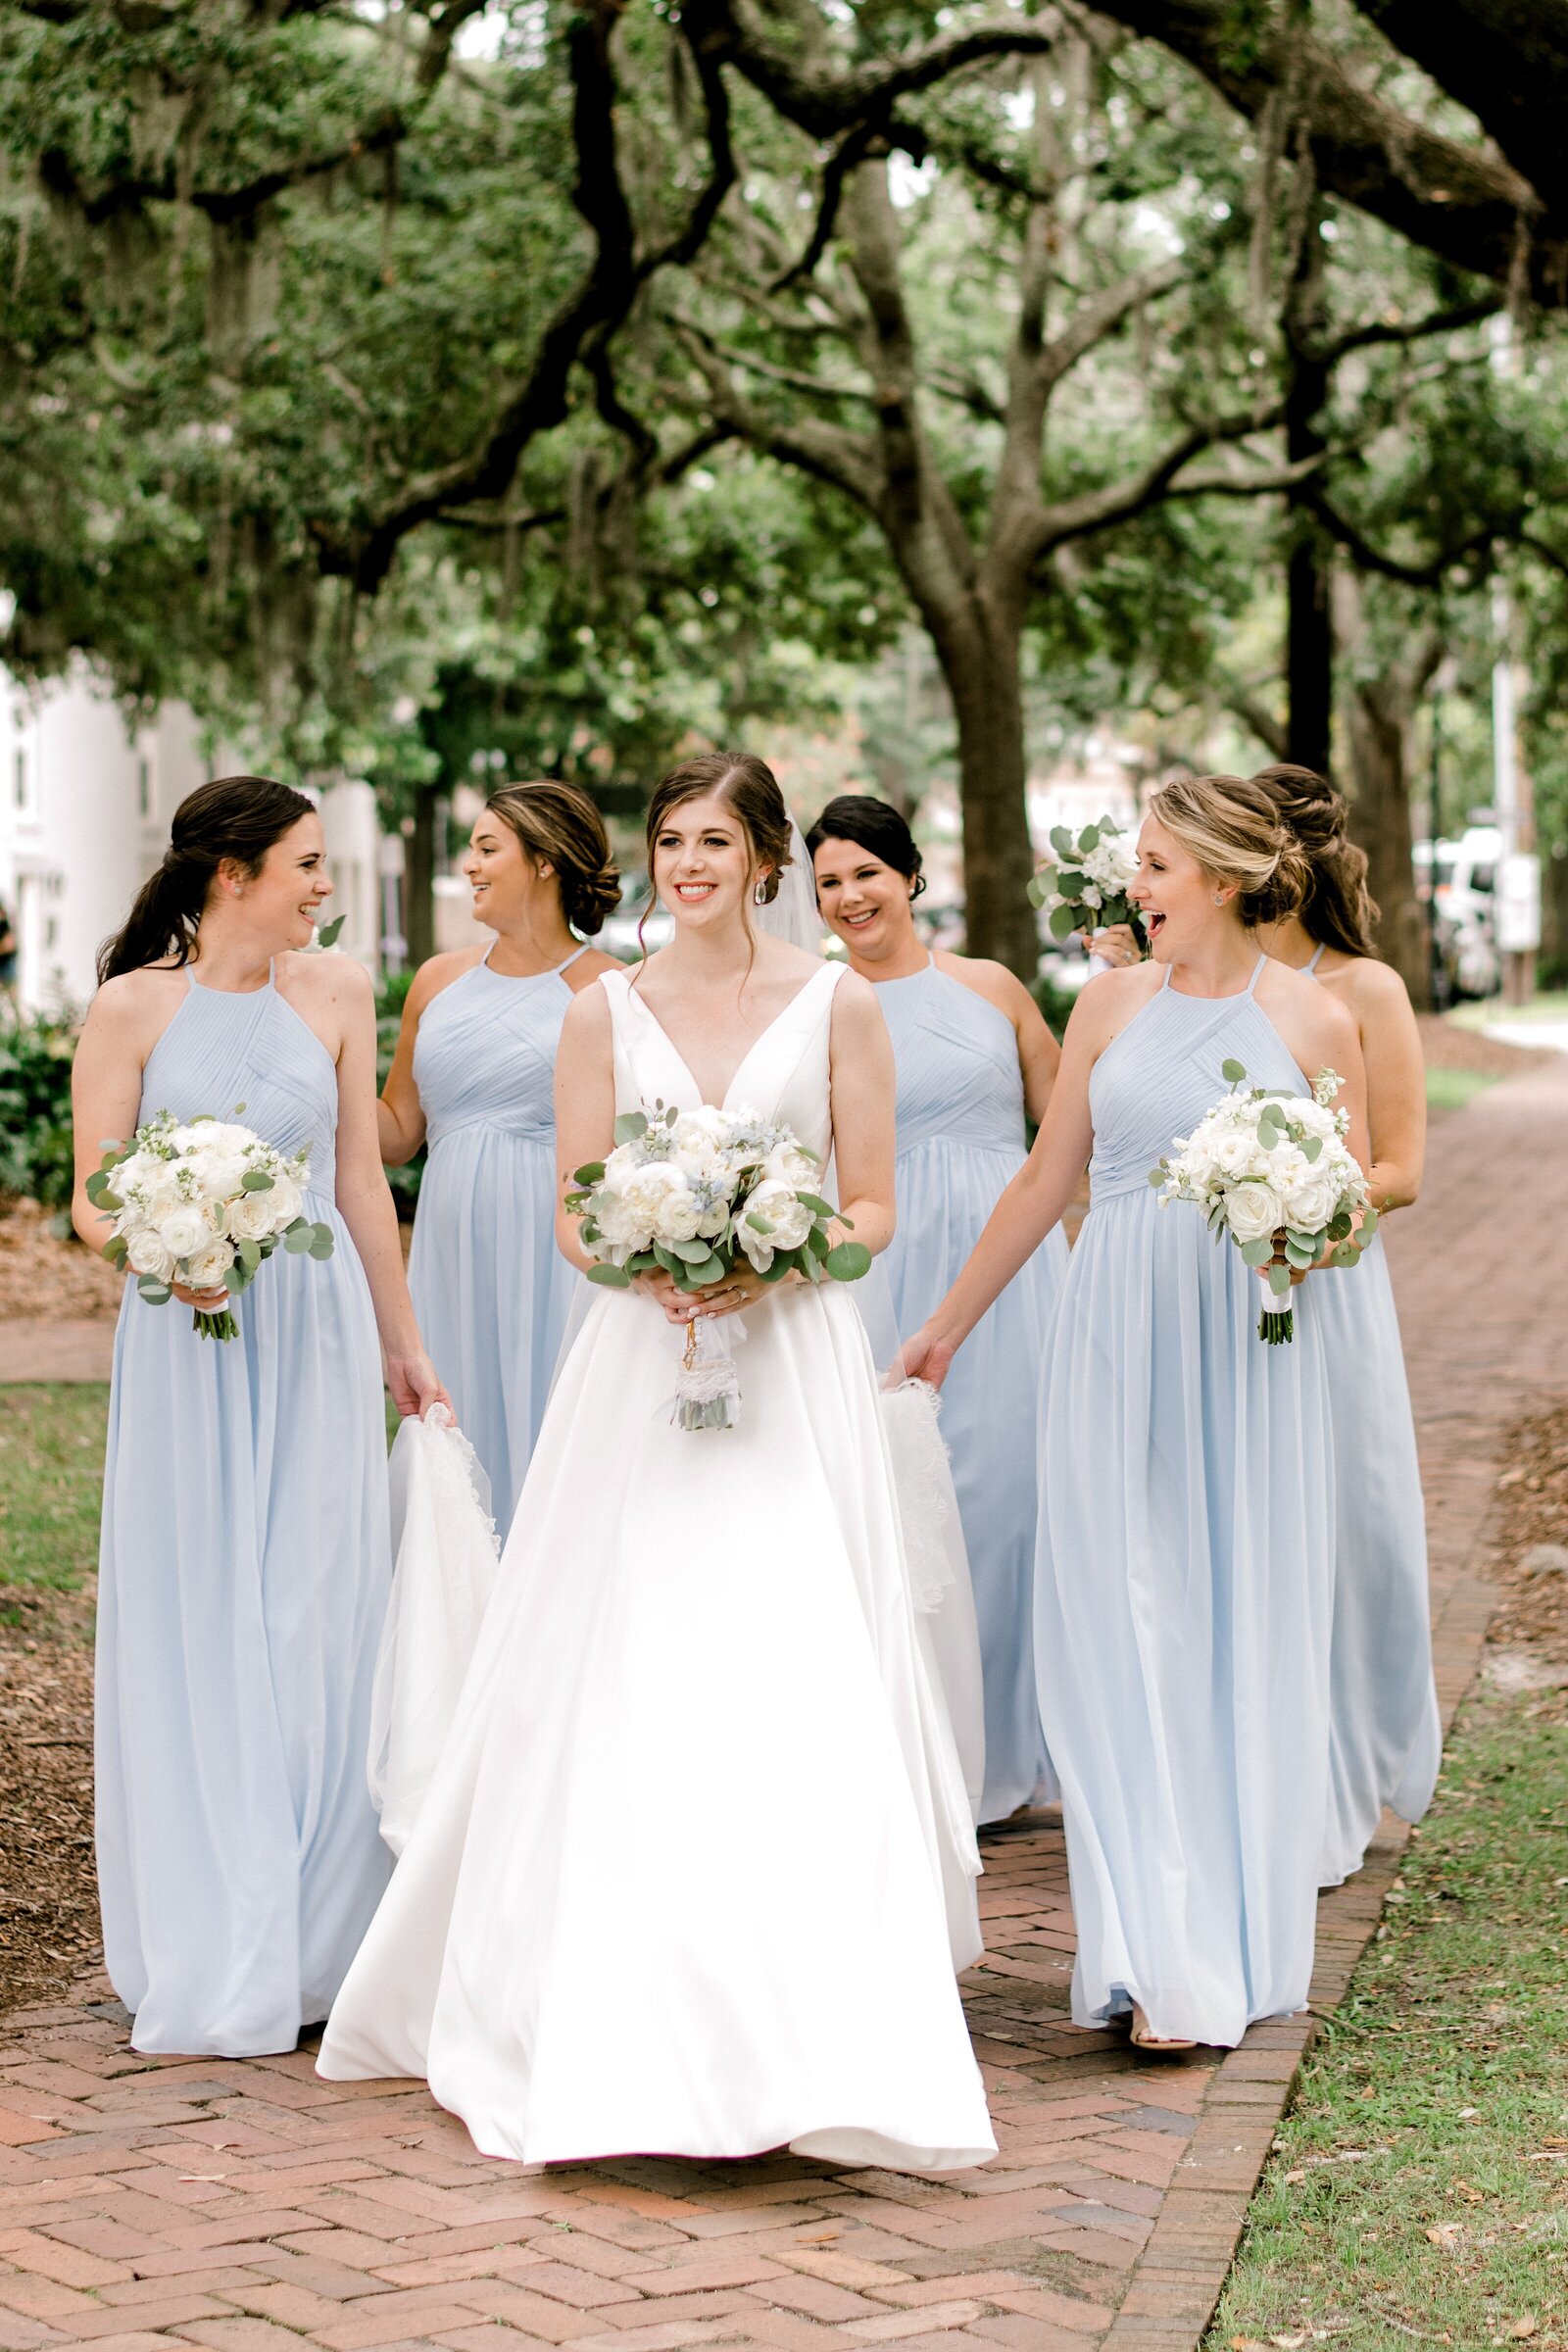 Bridesmaids ice blue dresses